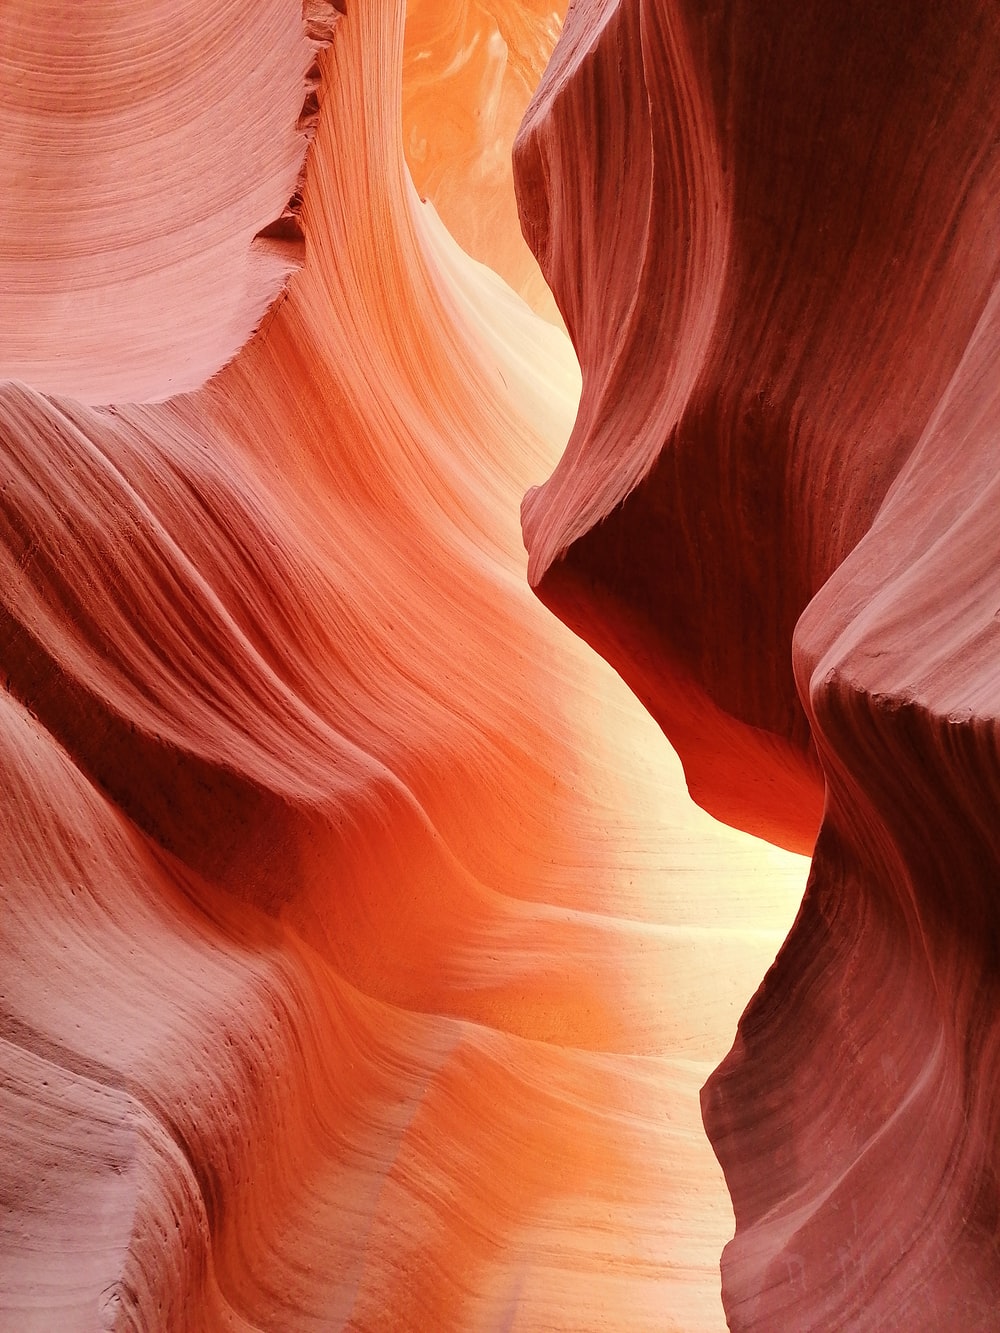 Antelope Canyon Wallpapers